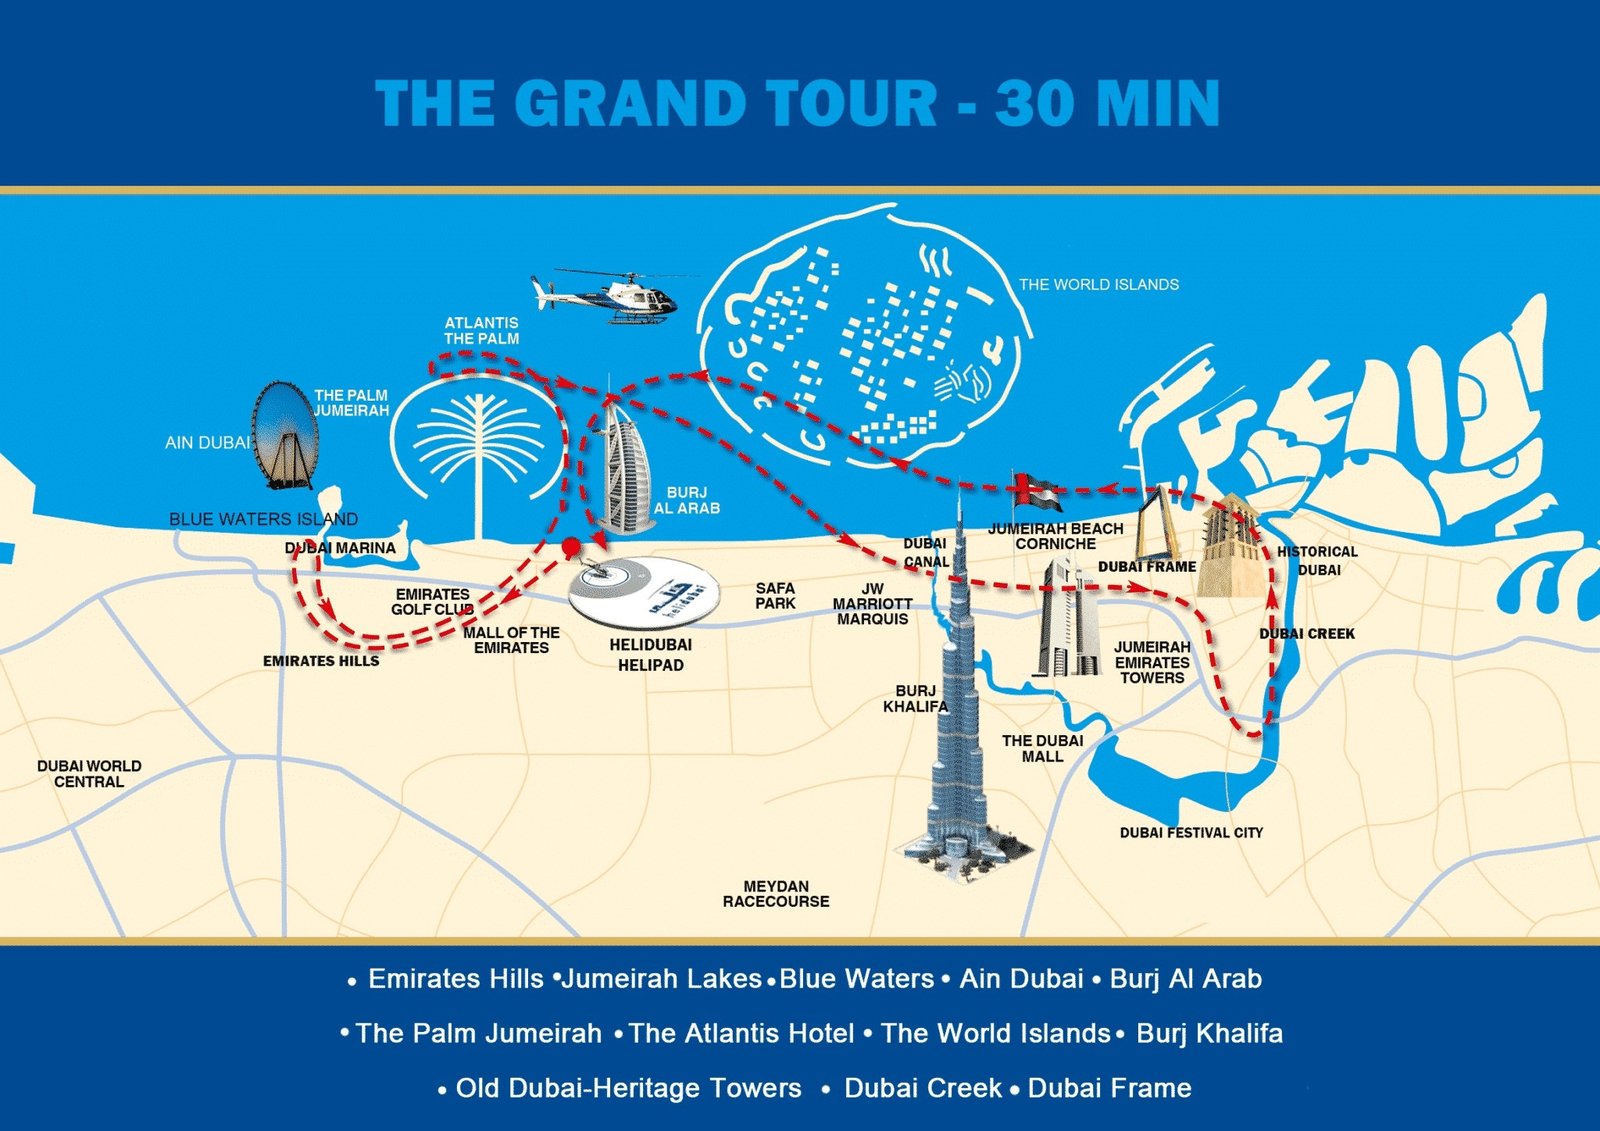 30-Mins The Grand Tour